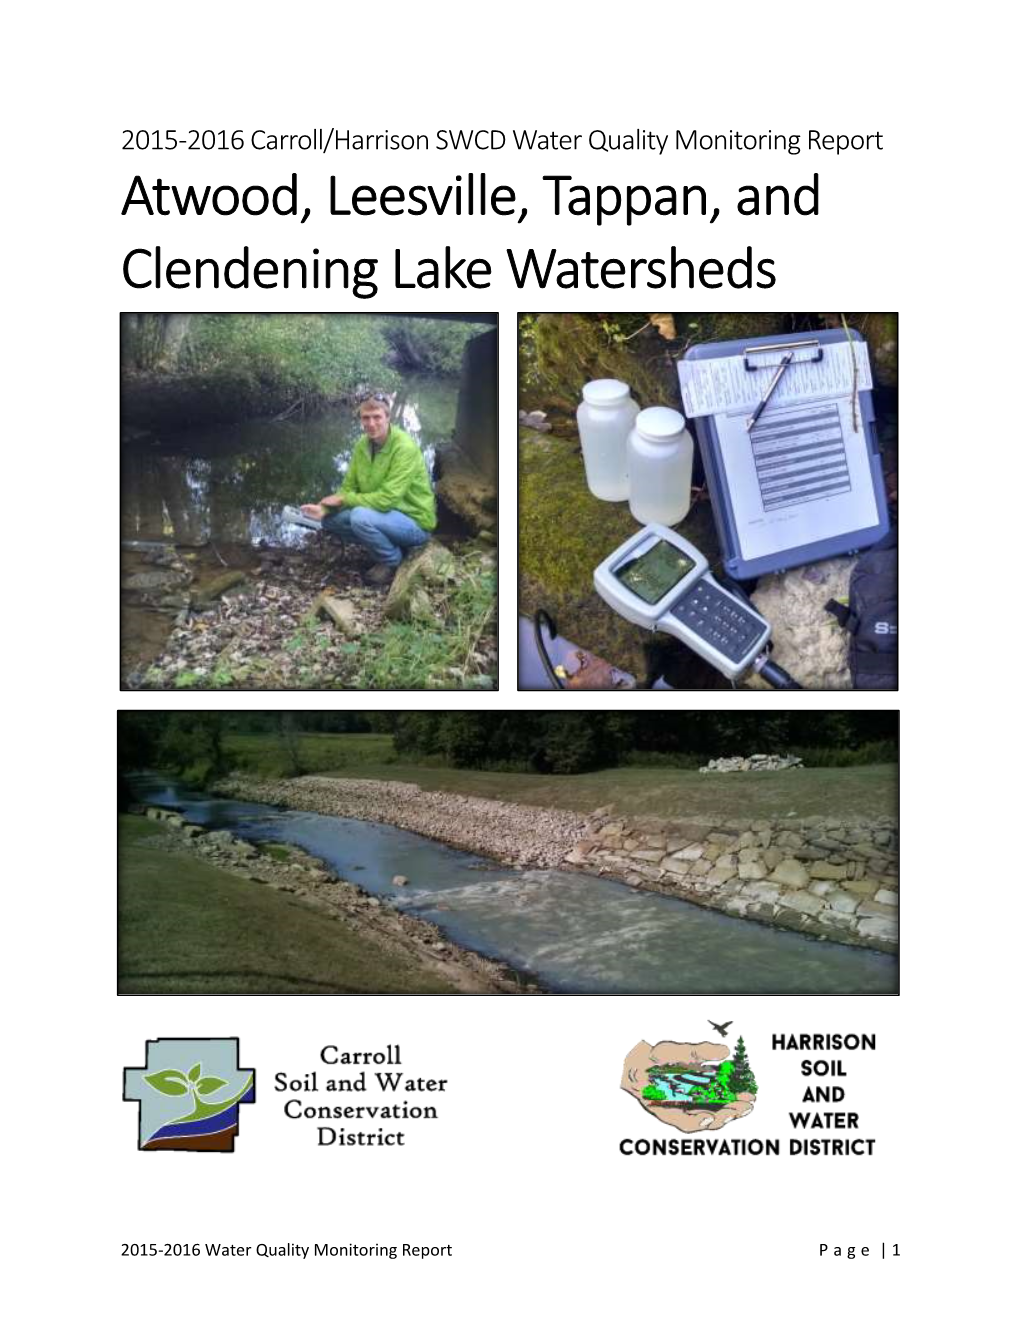 Atwood, Leesville, Tappan, and Clendening Lake Watersheds